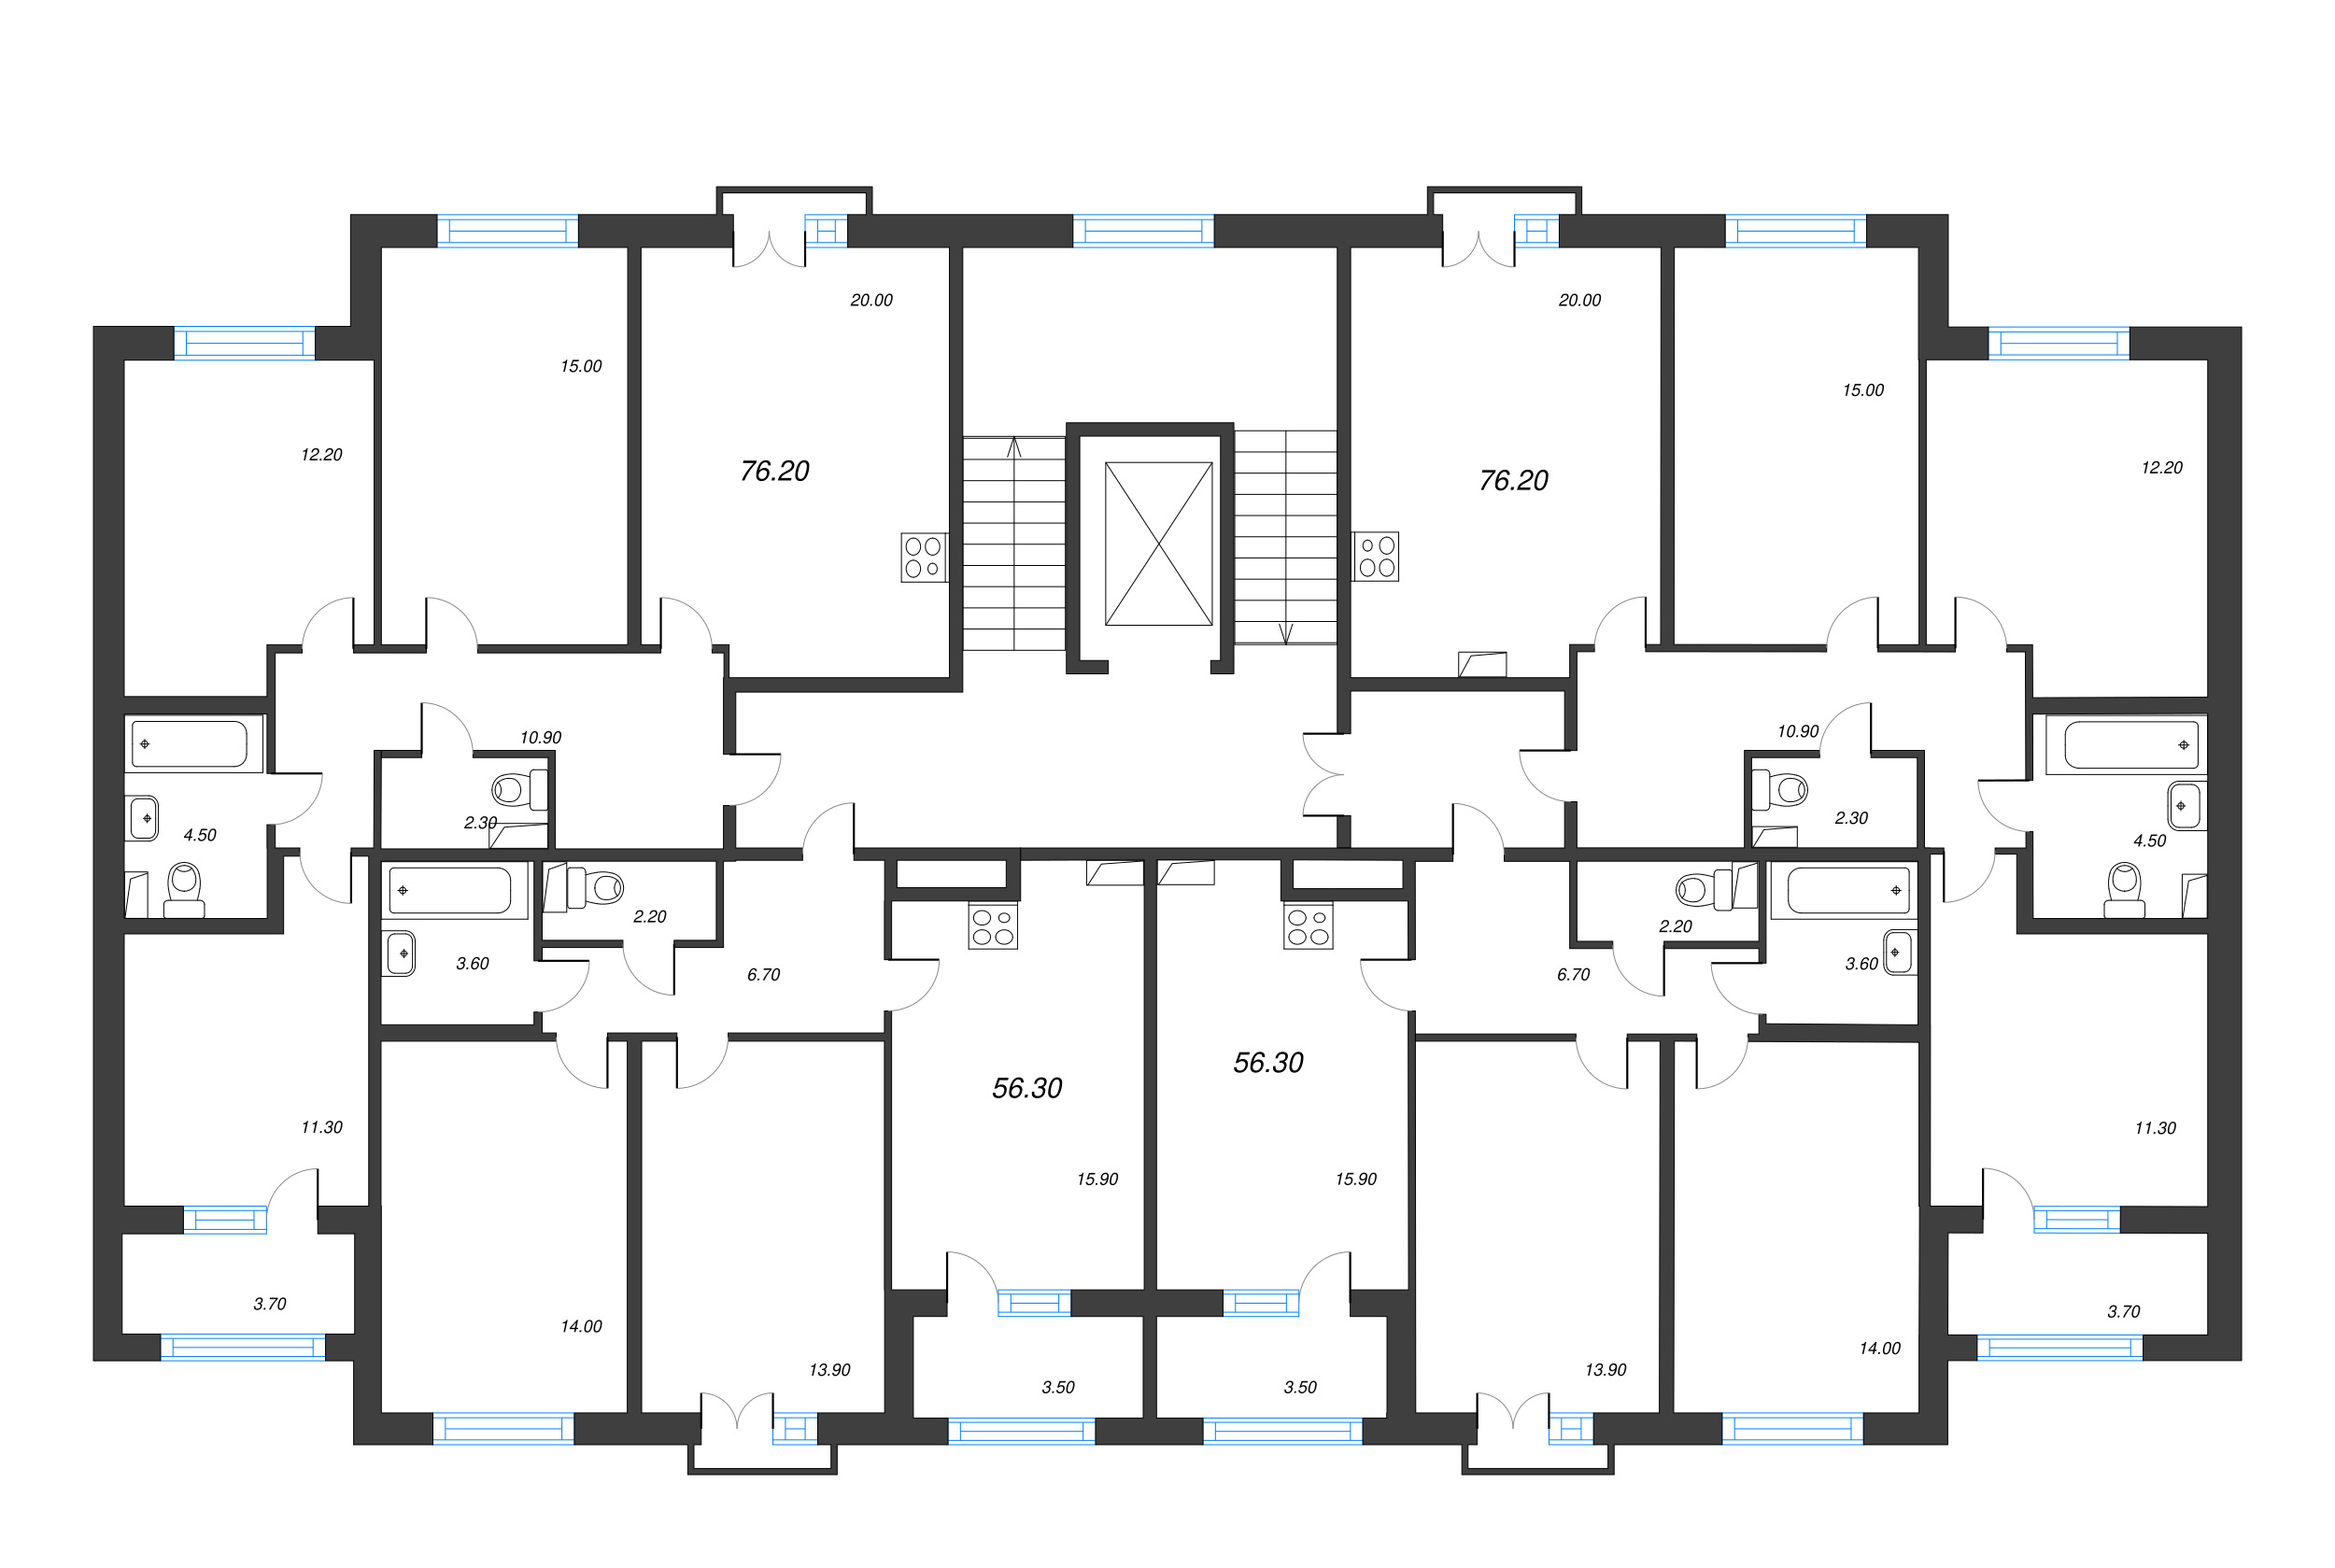 4-комнатная (Евро) квартира, 76.2 м² - планировка этажа